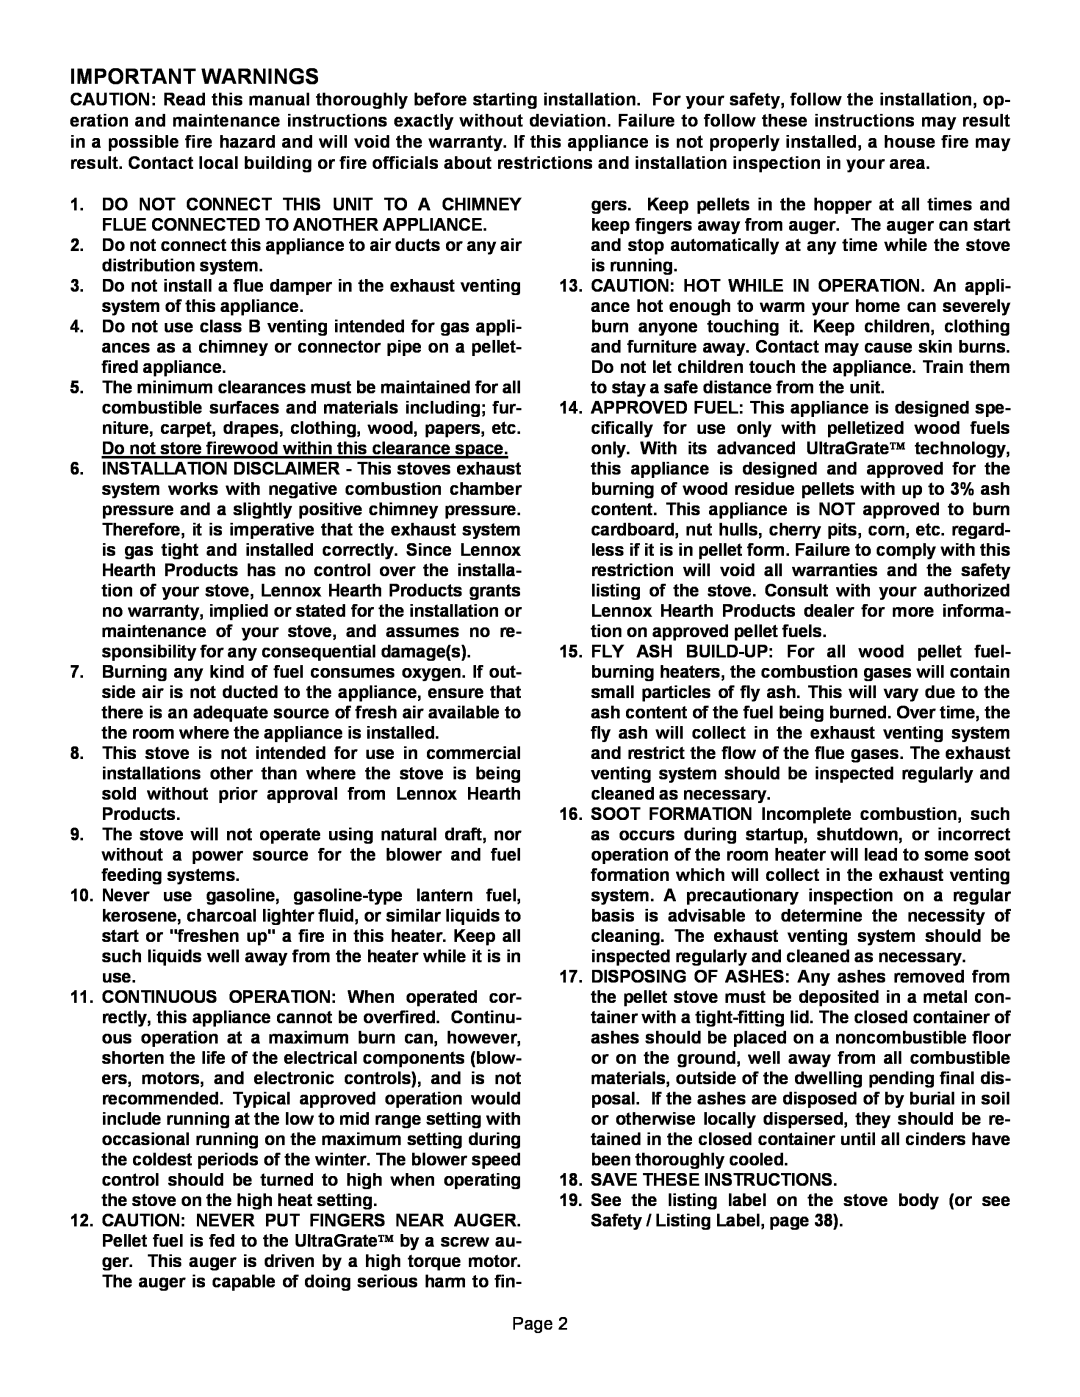 Lennox Hearth T300P operation manual Important Warnings 